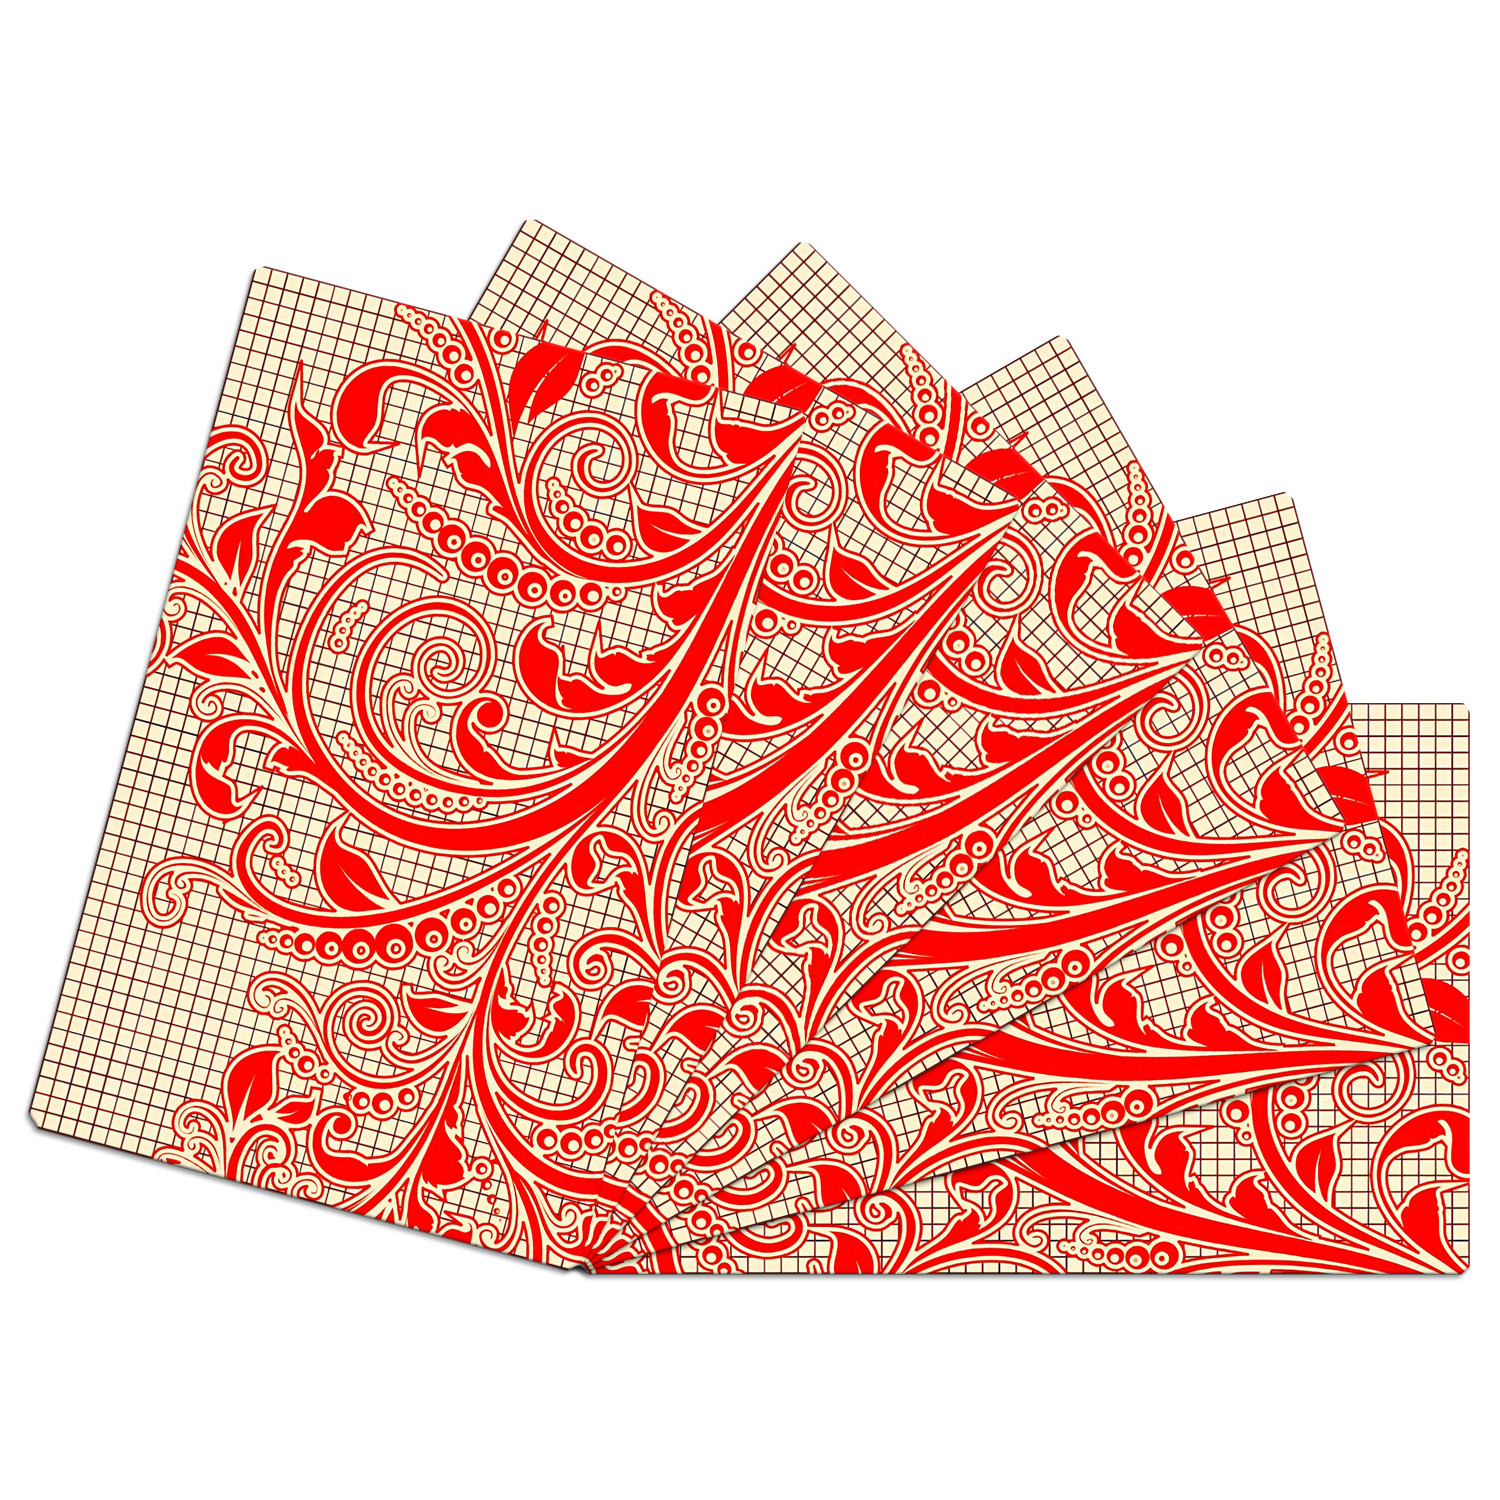 Kuber Industries Fridge Mats | PVC Red Leaf Print | Fridge Mat for Refrigerator | Fridge Placemats for Kitchen | Set of 6 | Red